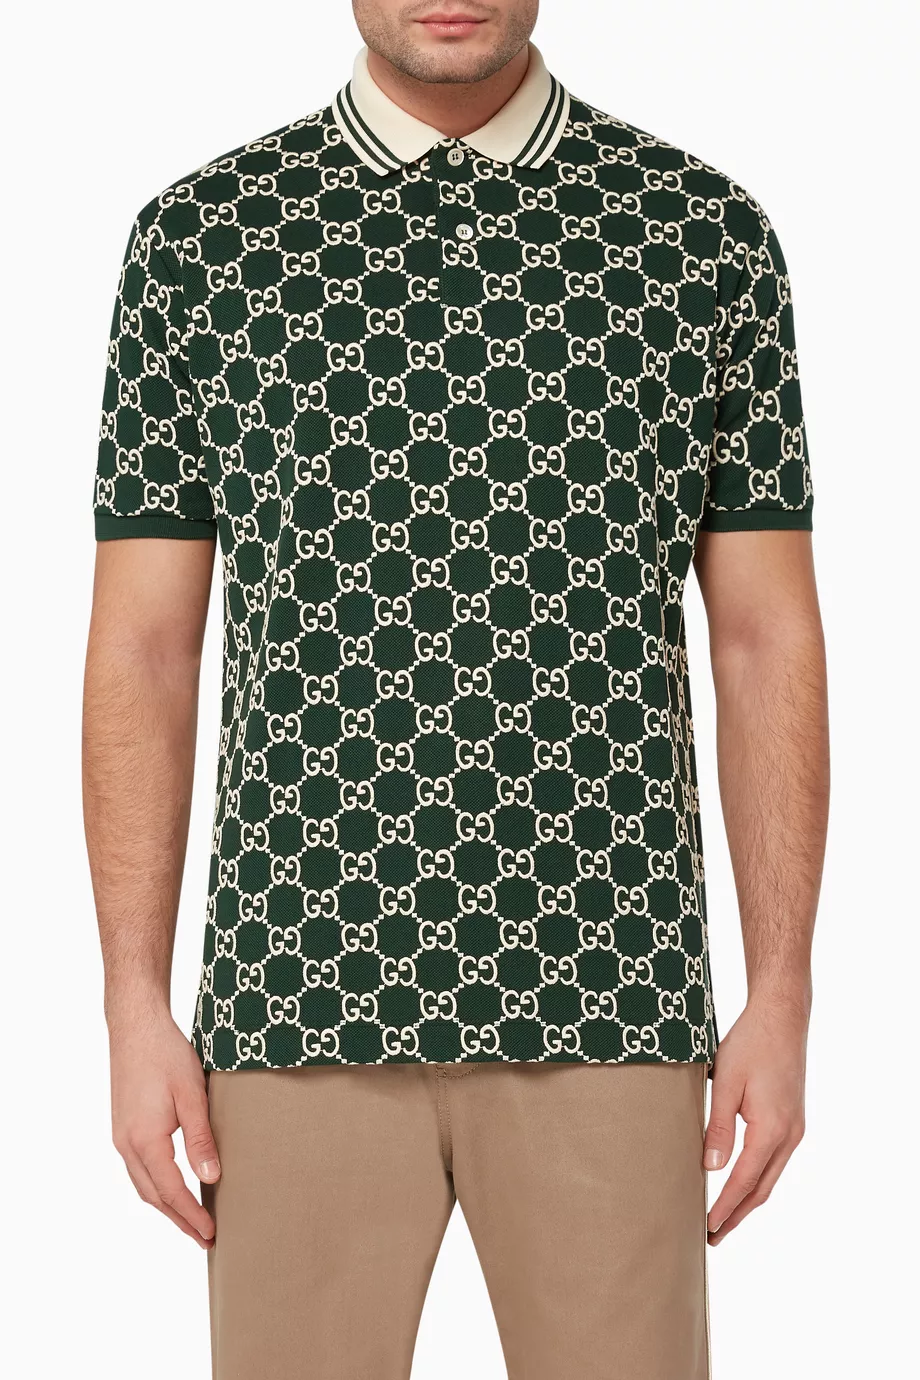 Gucci Men's Olive Green GG Polo Shirt S/M Gucci